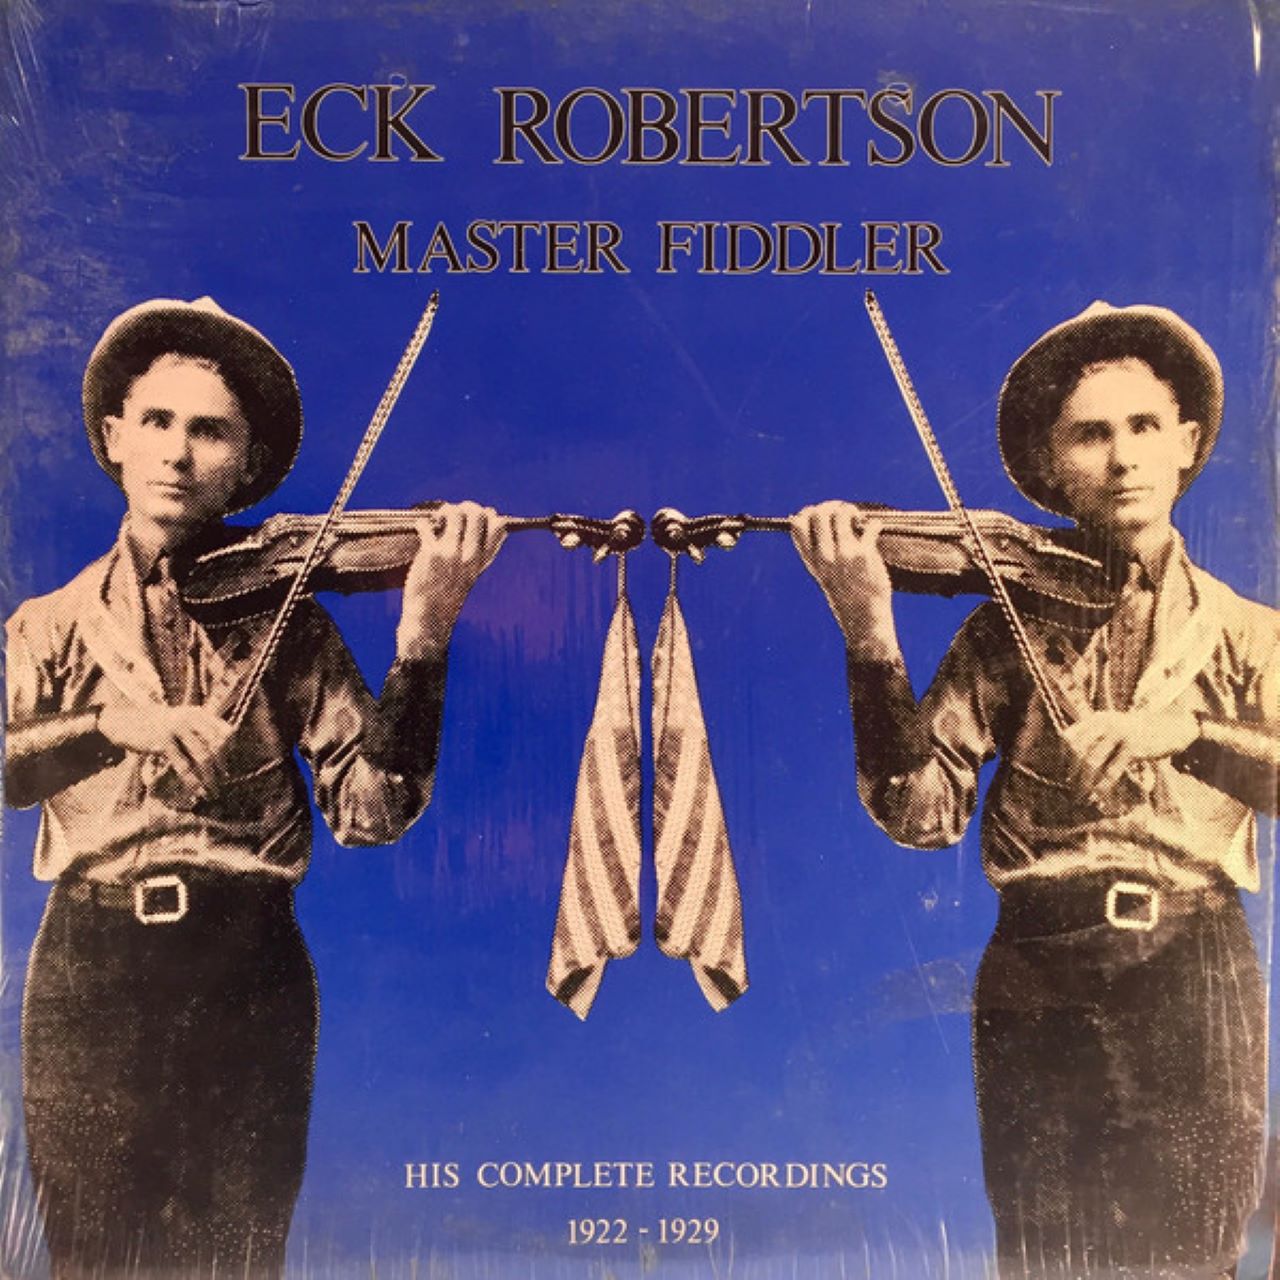 Eck Robertson - Master Fiddler cover album